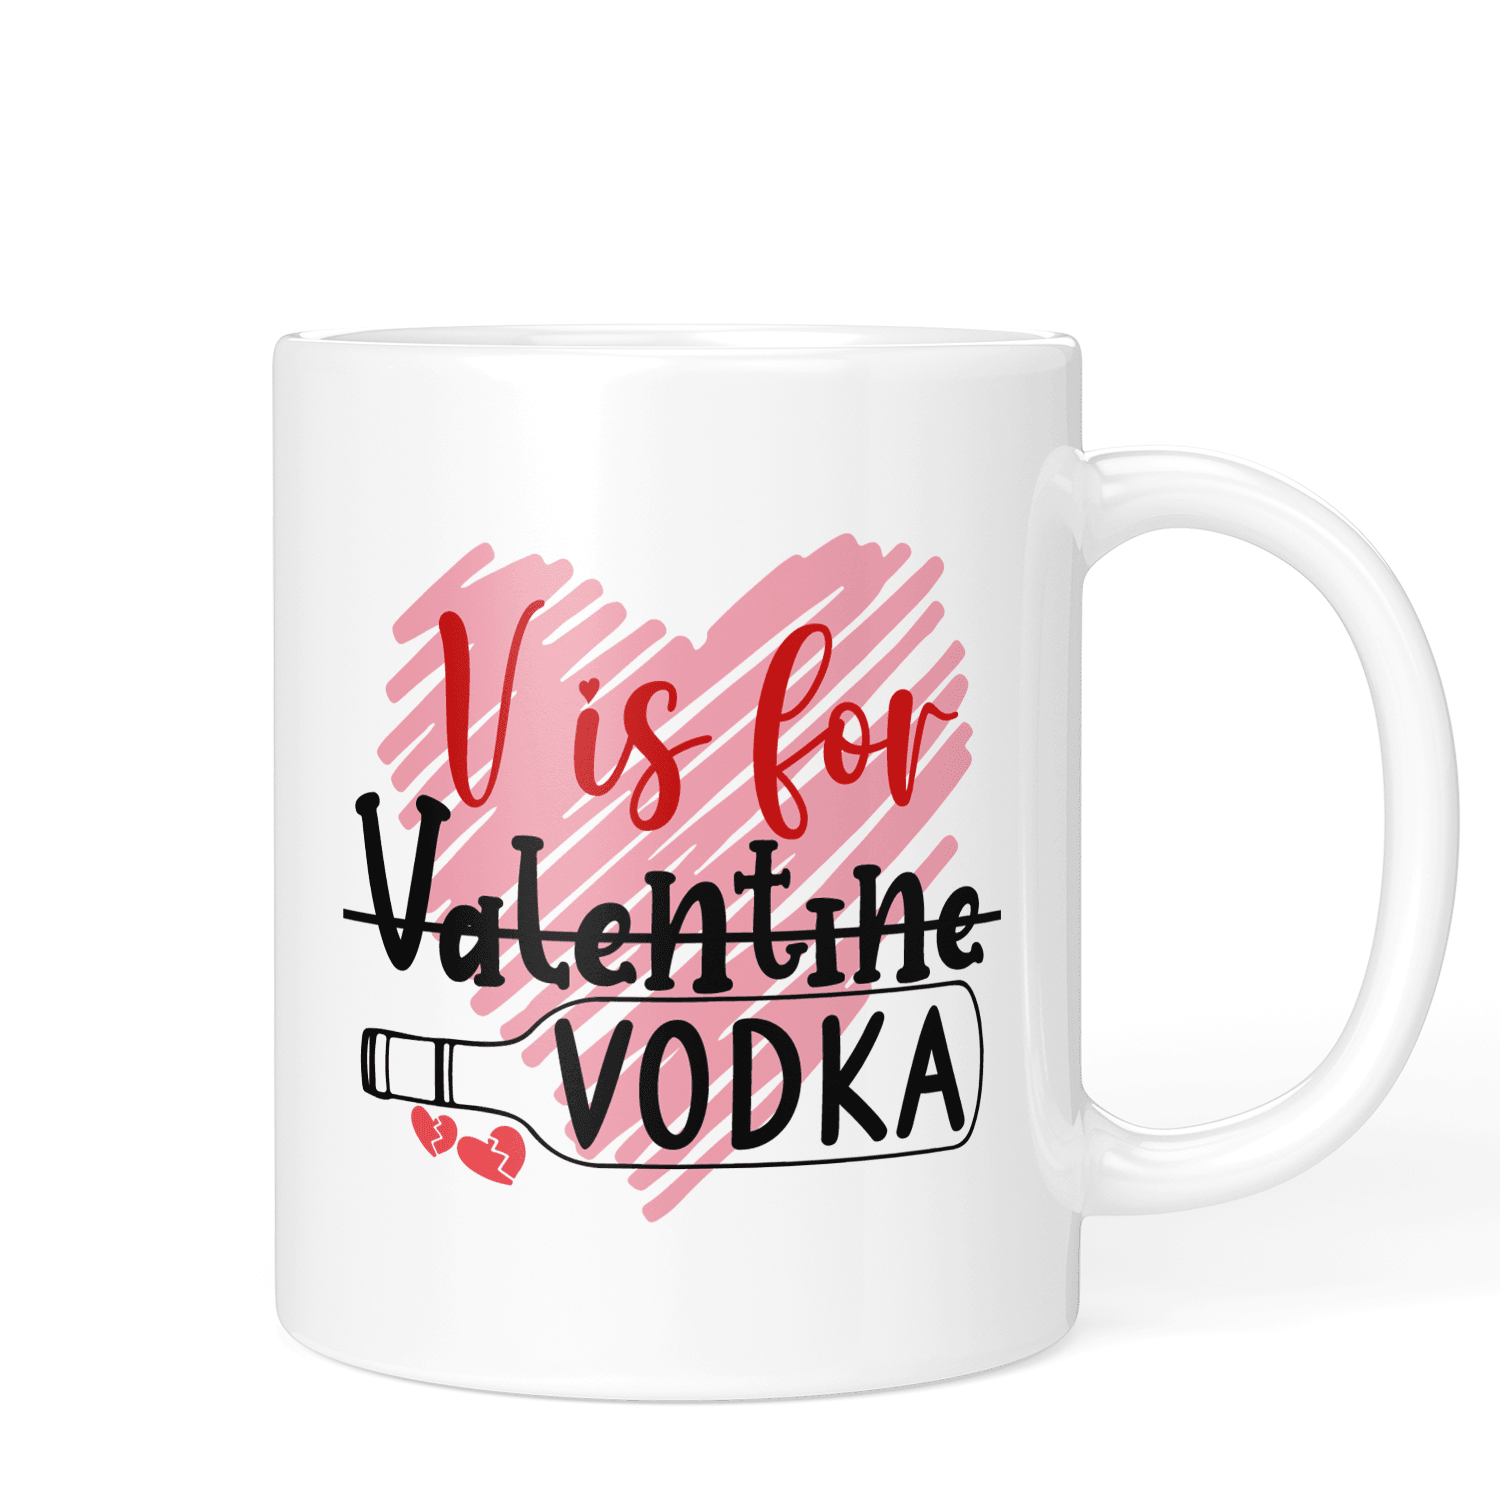 V is for Vodka Mug - Printibly